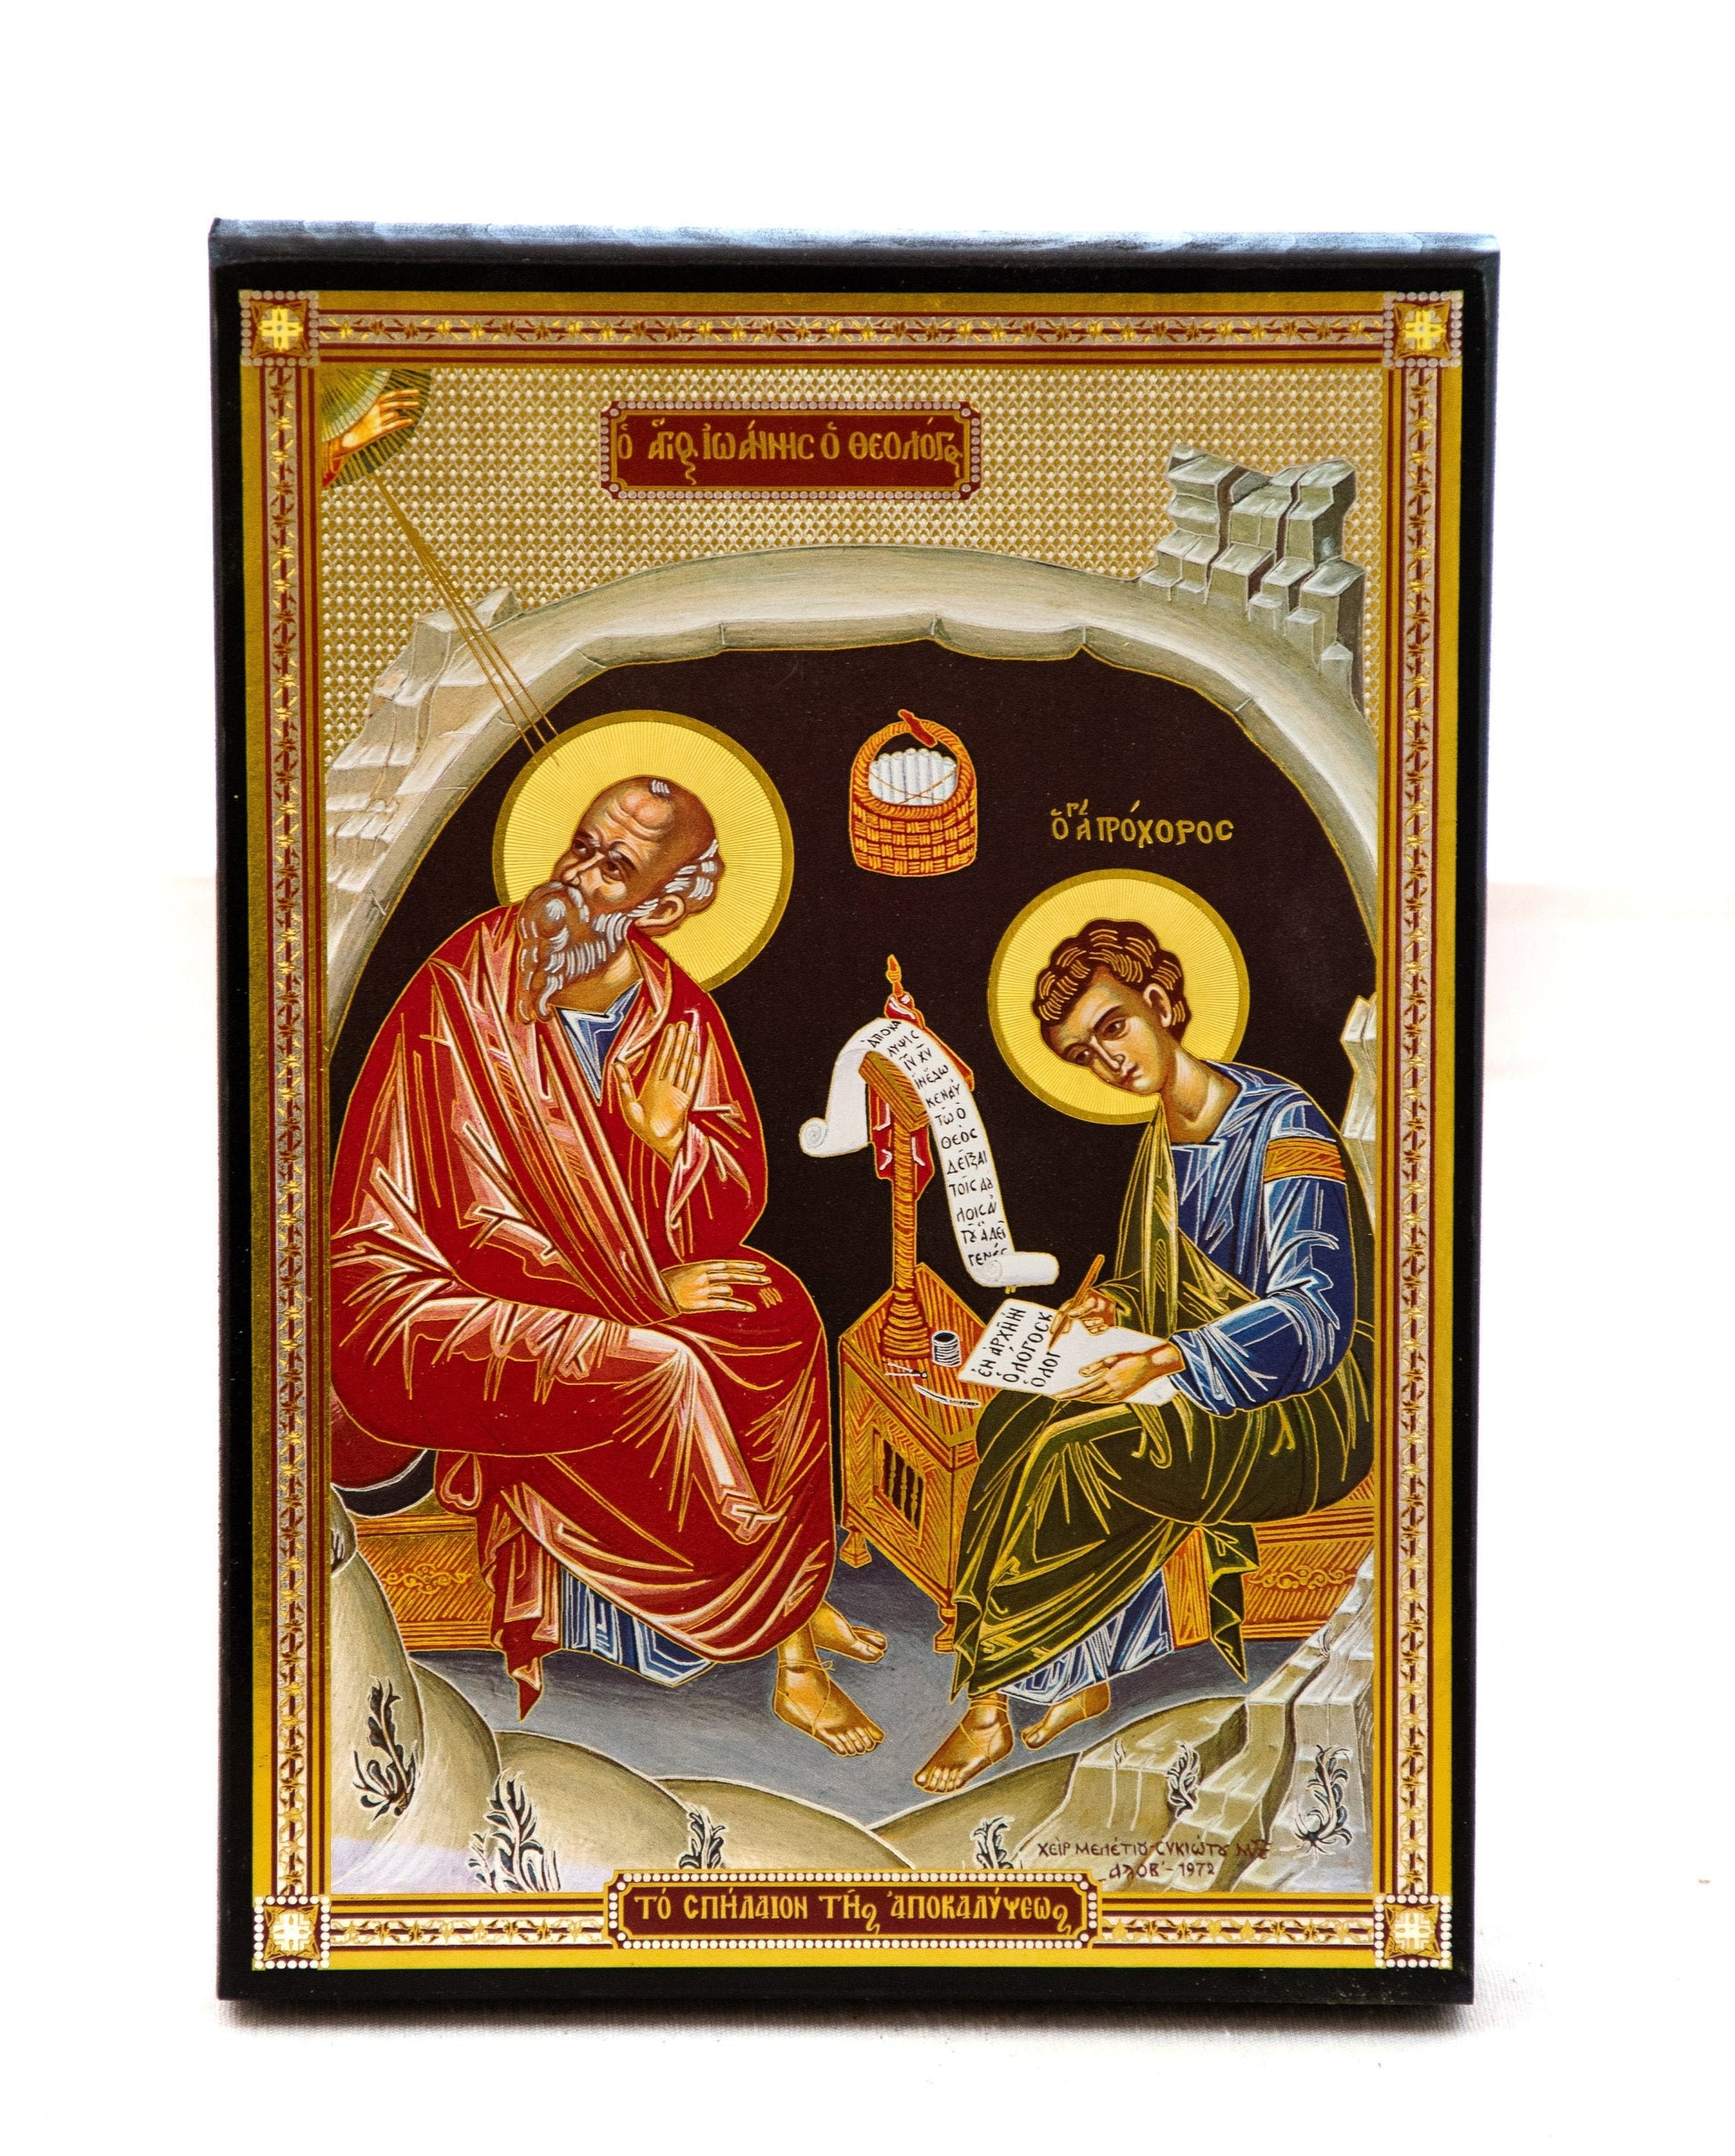 Saint John Evangelist icon, Orthodox icon of the Apocalypse, Apostle John Byzantine art wall hanging, Handmade icon wood plaque 27x21cm TheHolyArt